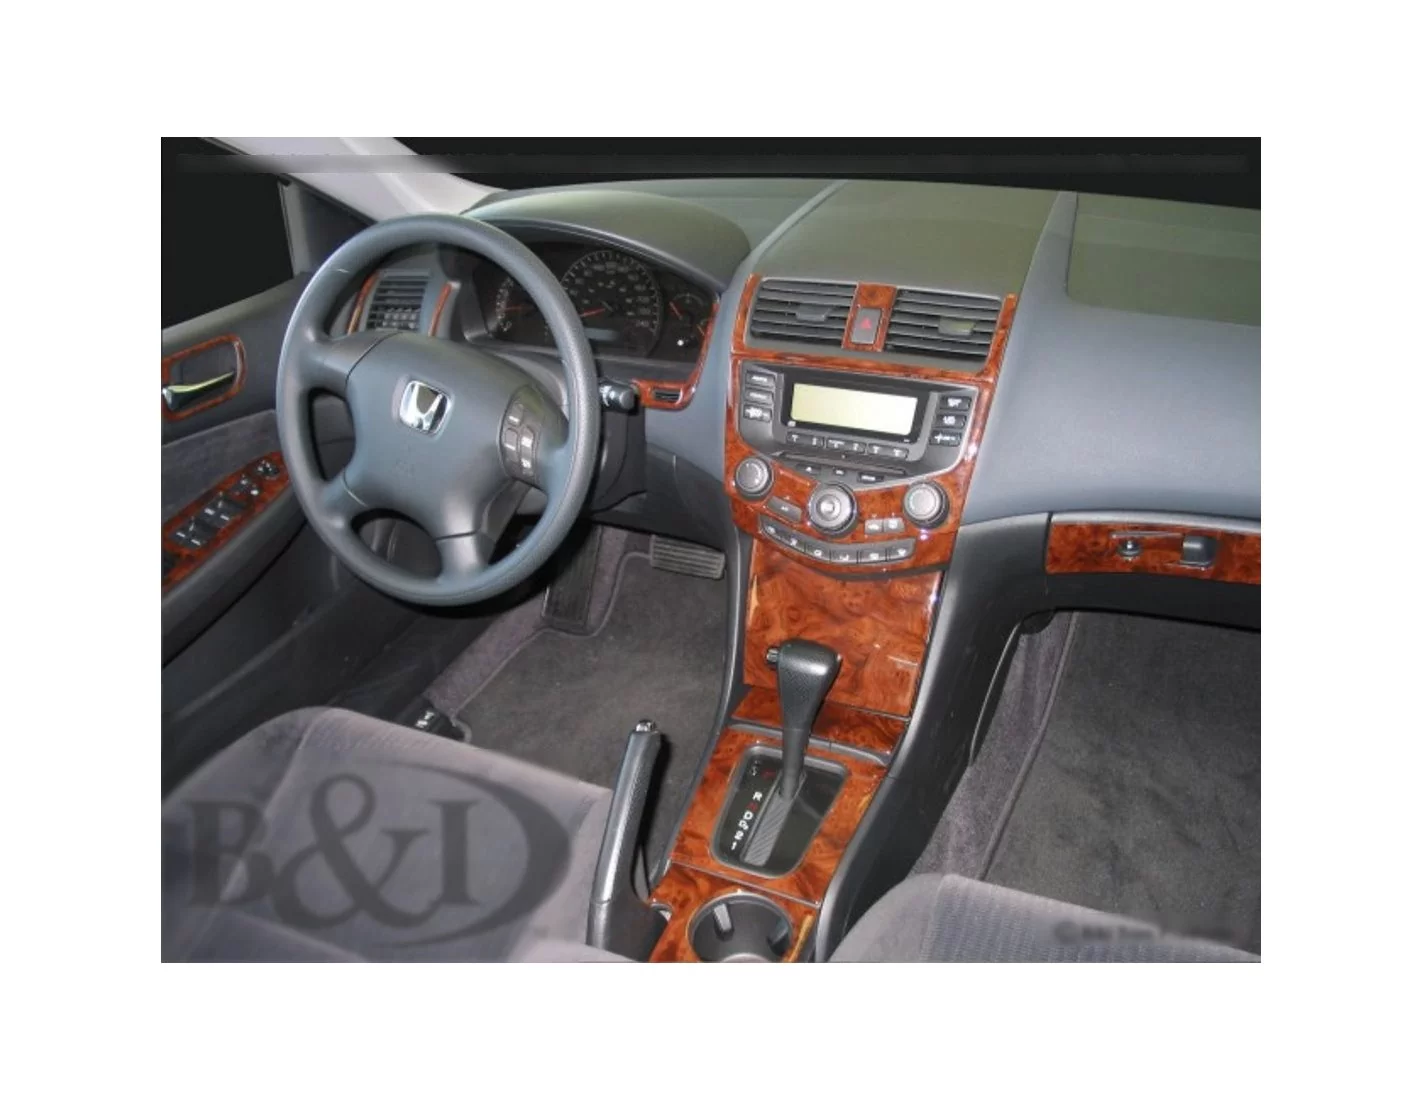 Honda Accord 2003-2007 Voll Satz, With NAVI system, 4 Doors BD innenausstattung armaturendekor cockpit dekor - 1- Cockpit Dekor 